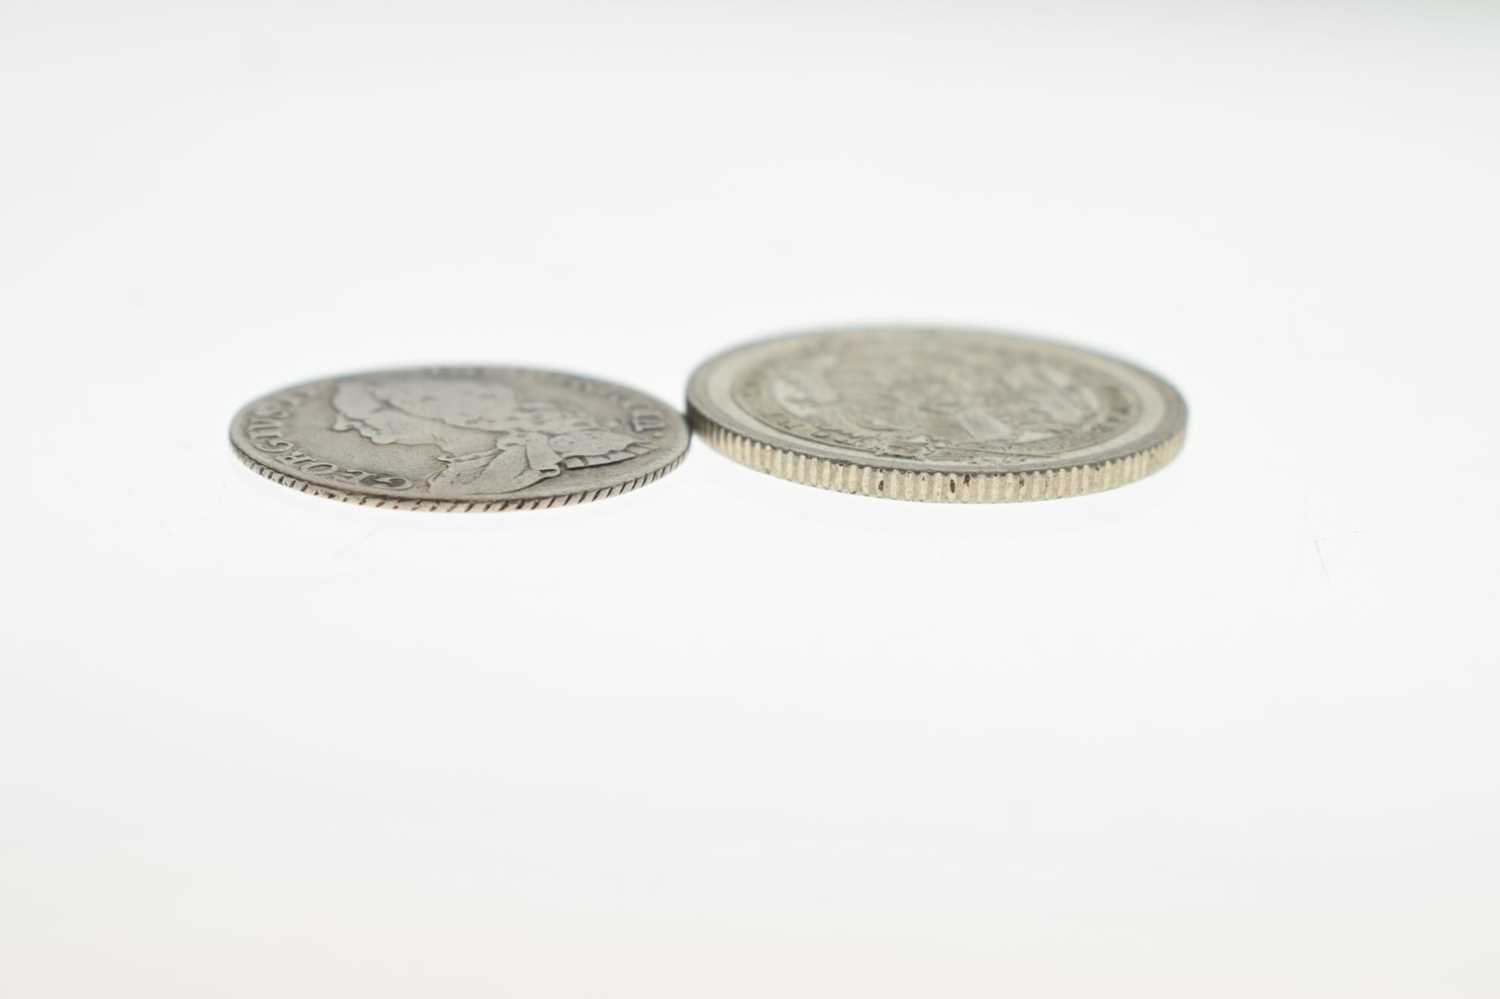 Four Georgian milled coins, George II and George III - Image 7 of 8